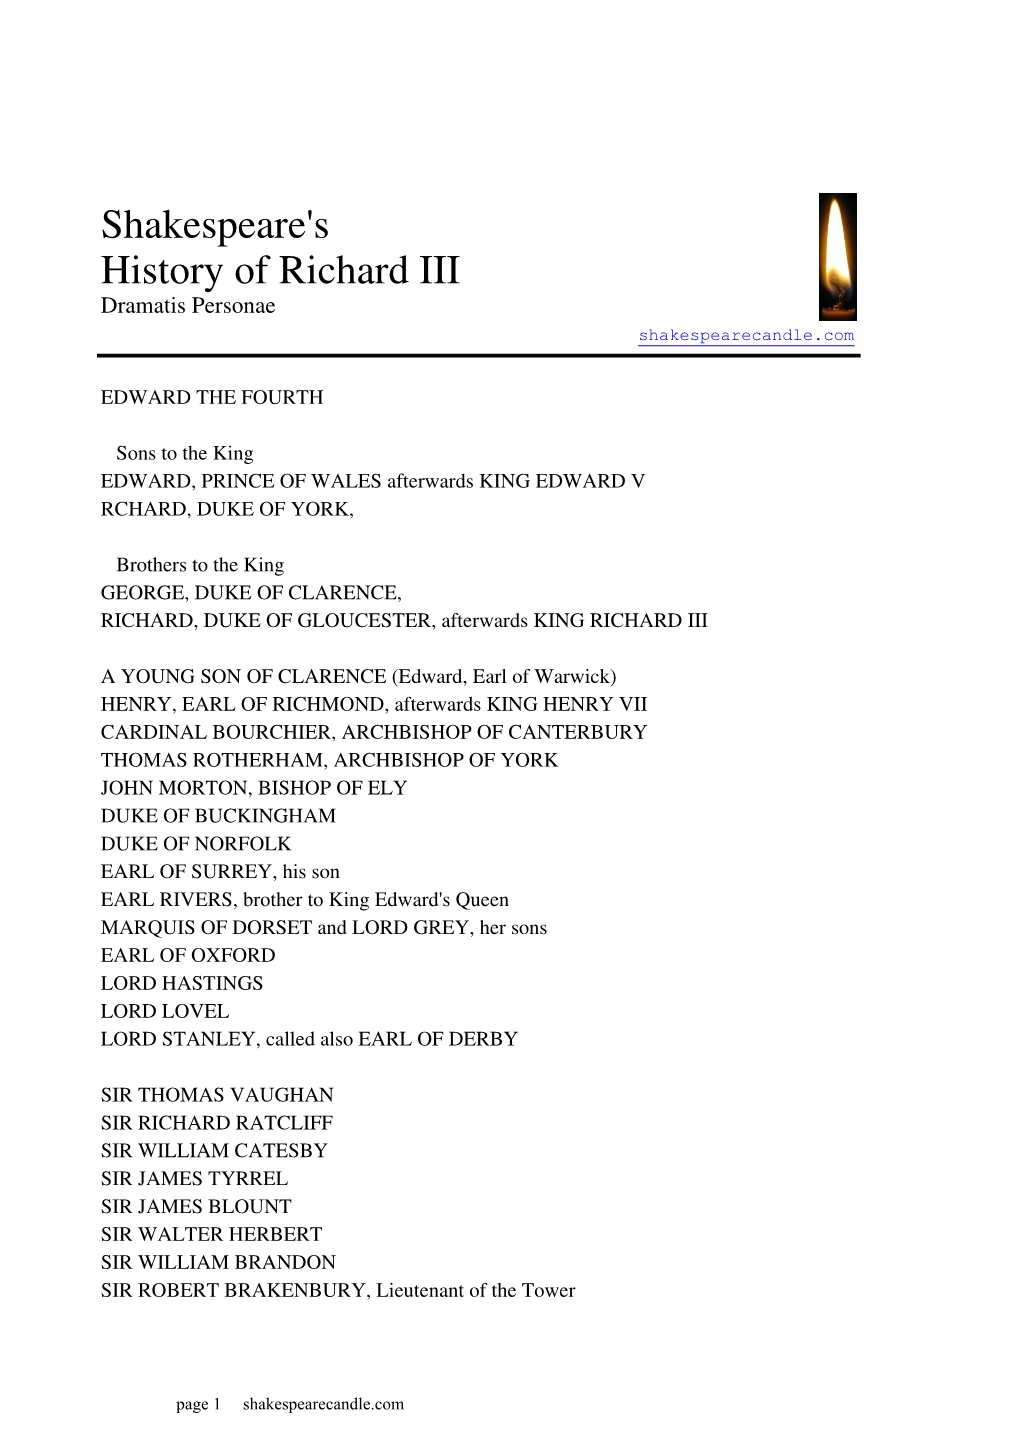 History of Richard III Dramatis Personae Shakespearecandle.Com